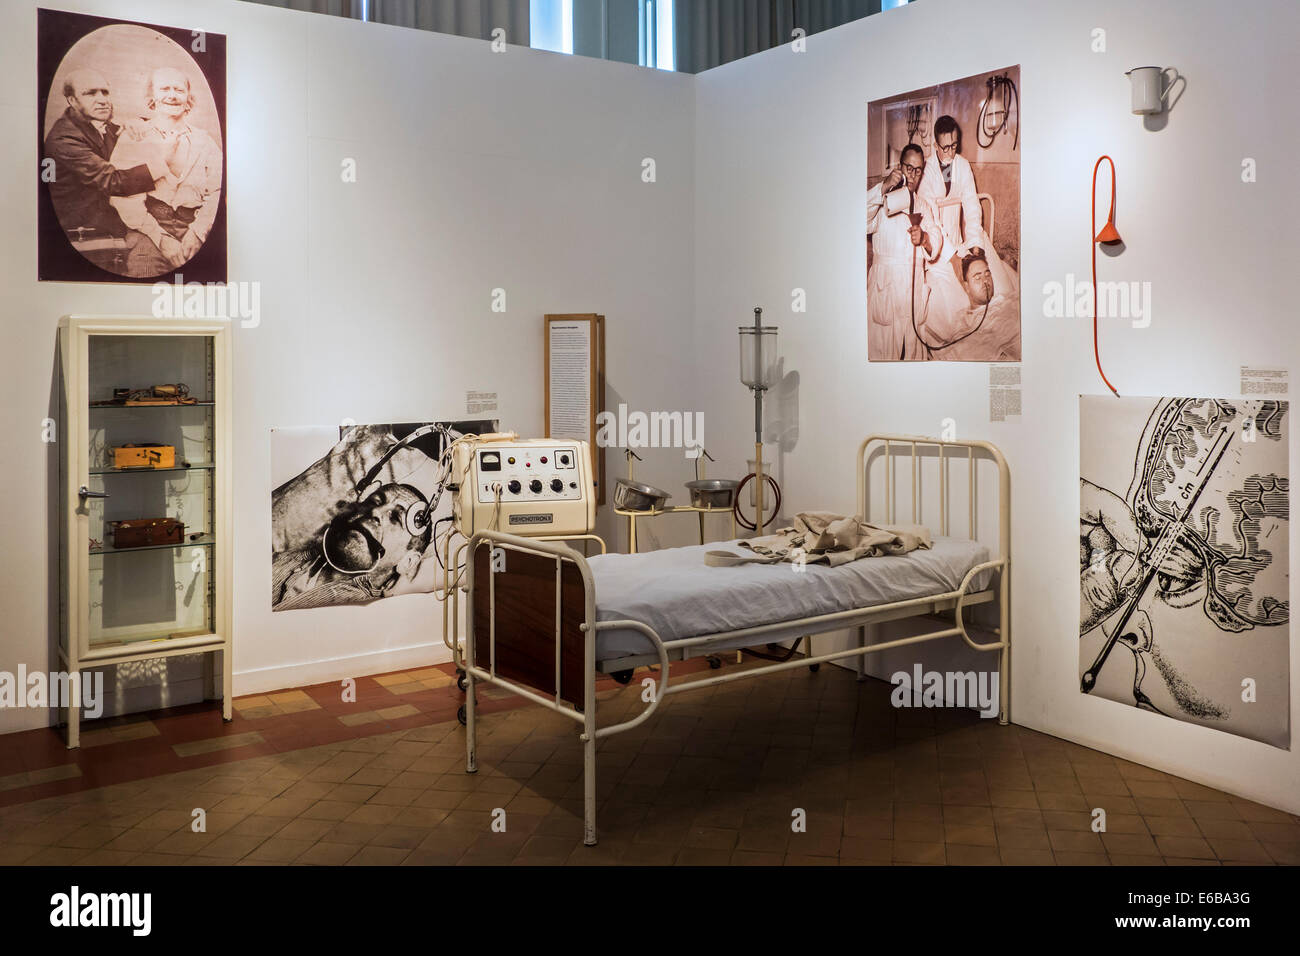 Psychotron II für Elektroschock-Therapie / Elektrokrampftherapie / ECT, Dr. Guislain Museum über die Psychiatrie, Gent, Belgien Stockfoto